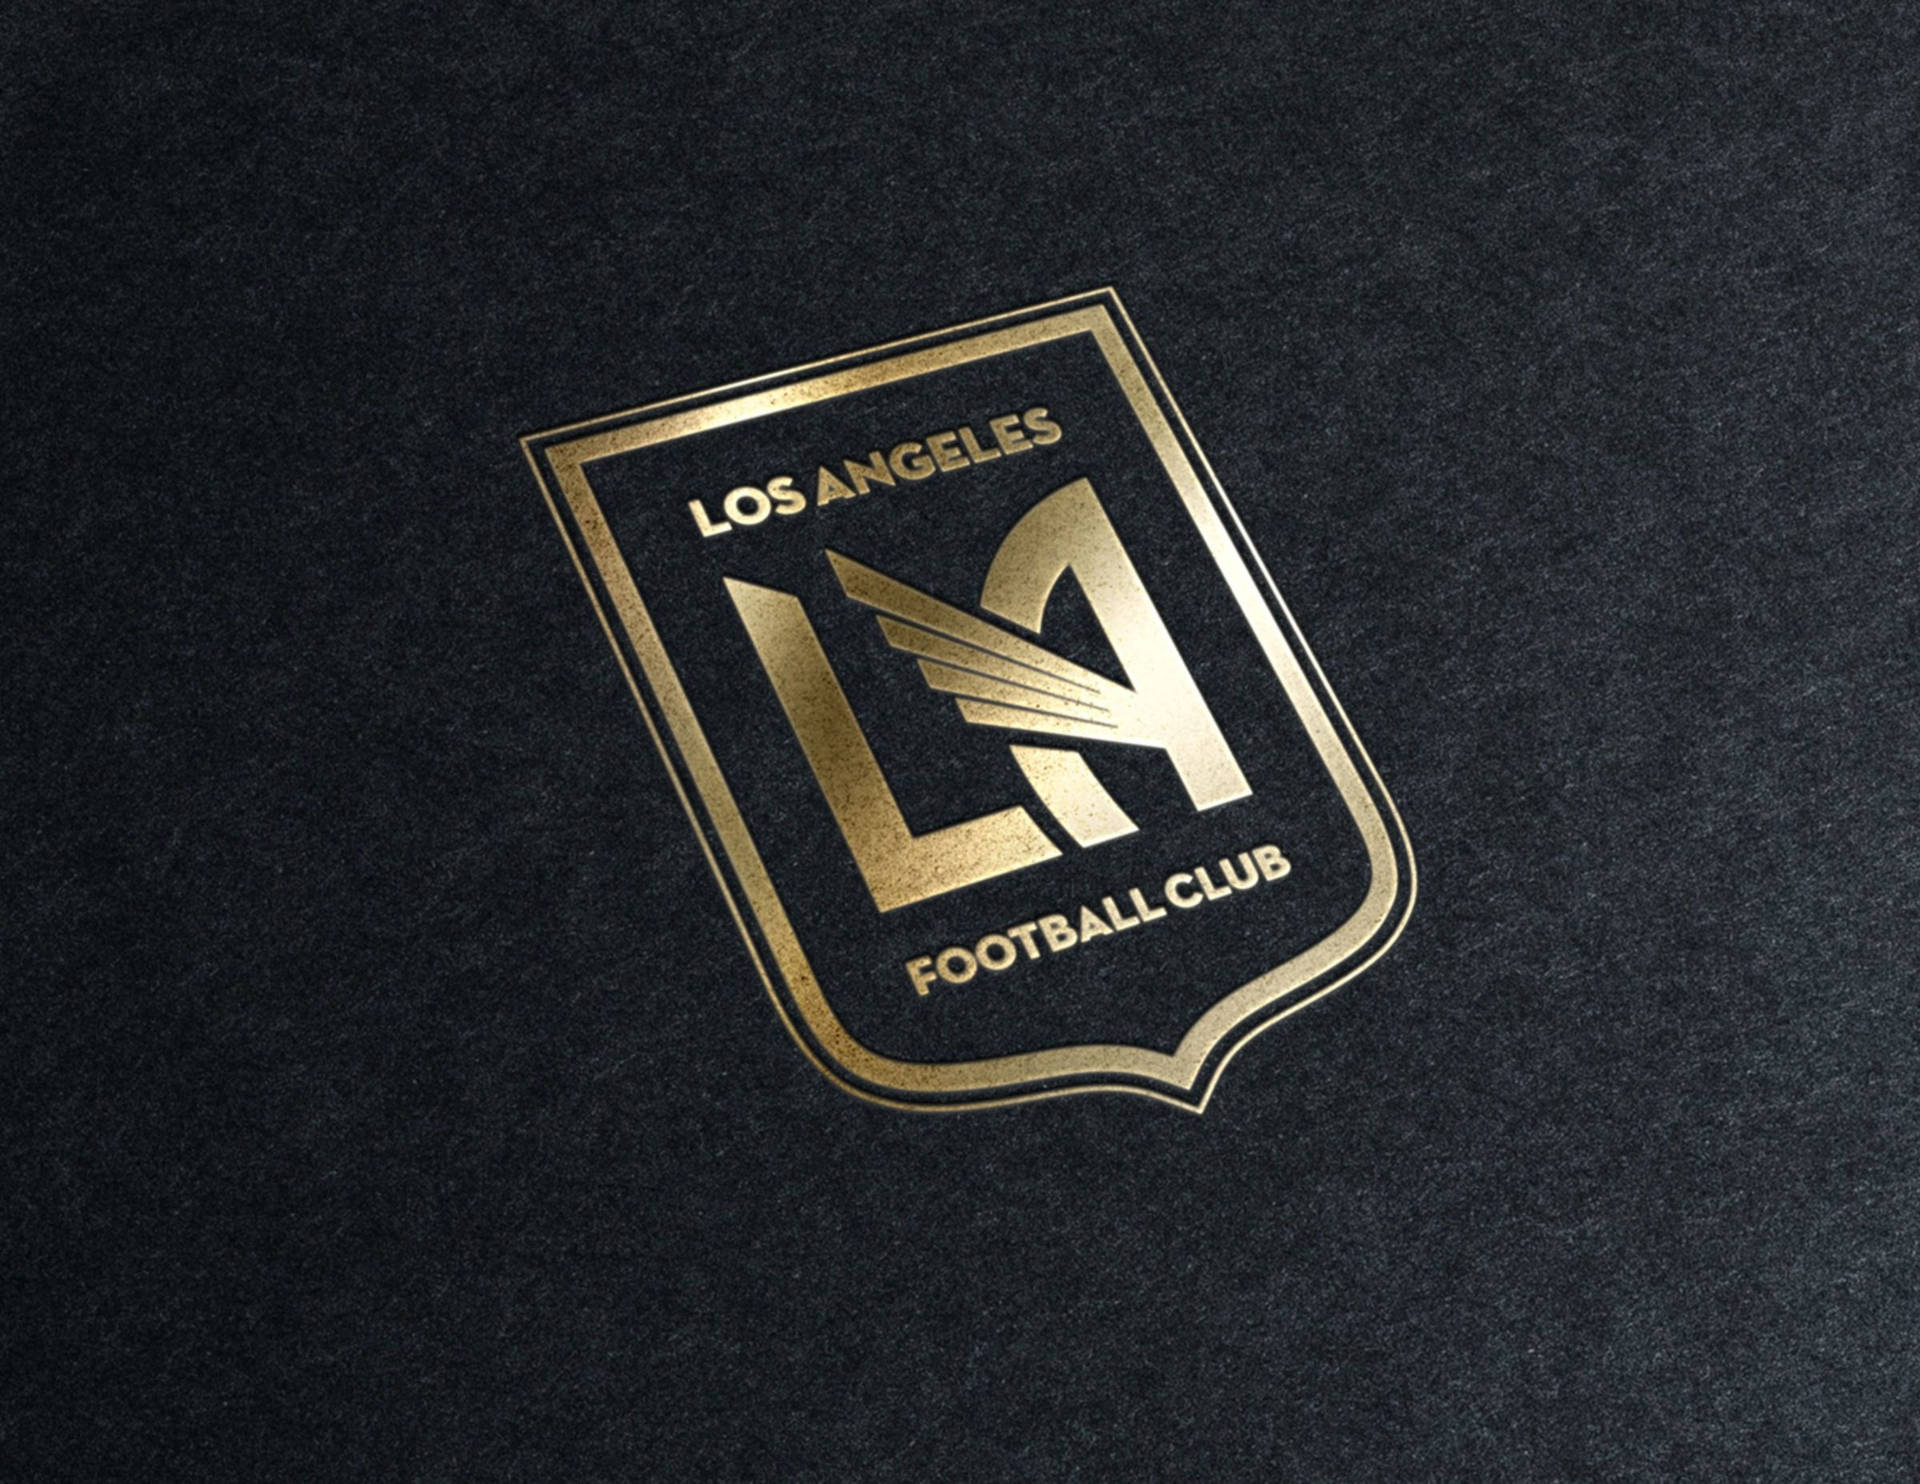 LAFC Gold Logo Embedded On Black Backdrop Wallpaper